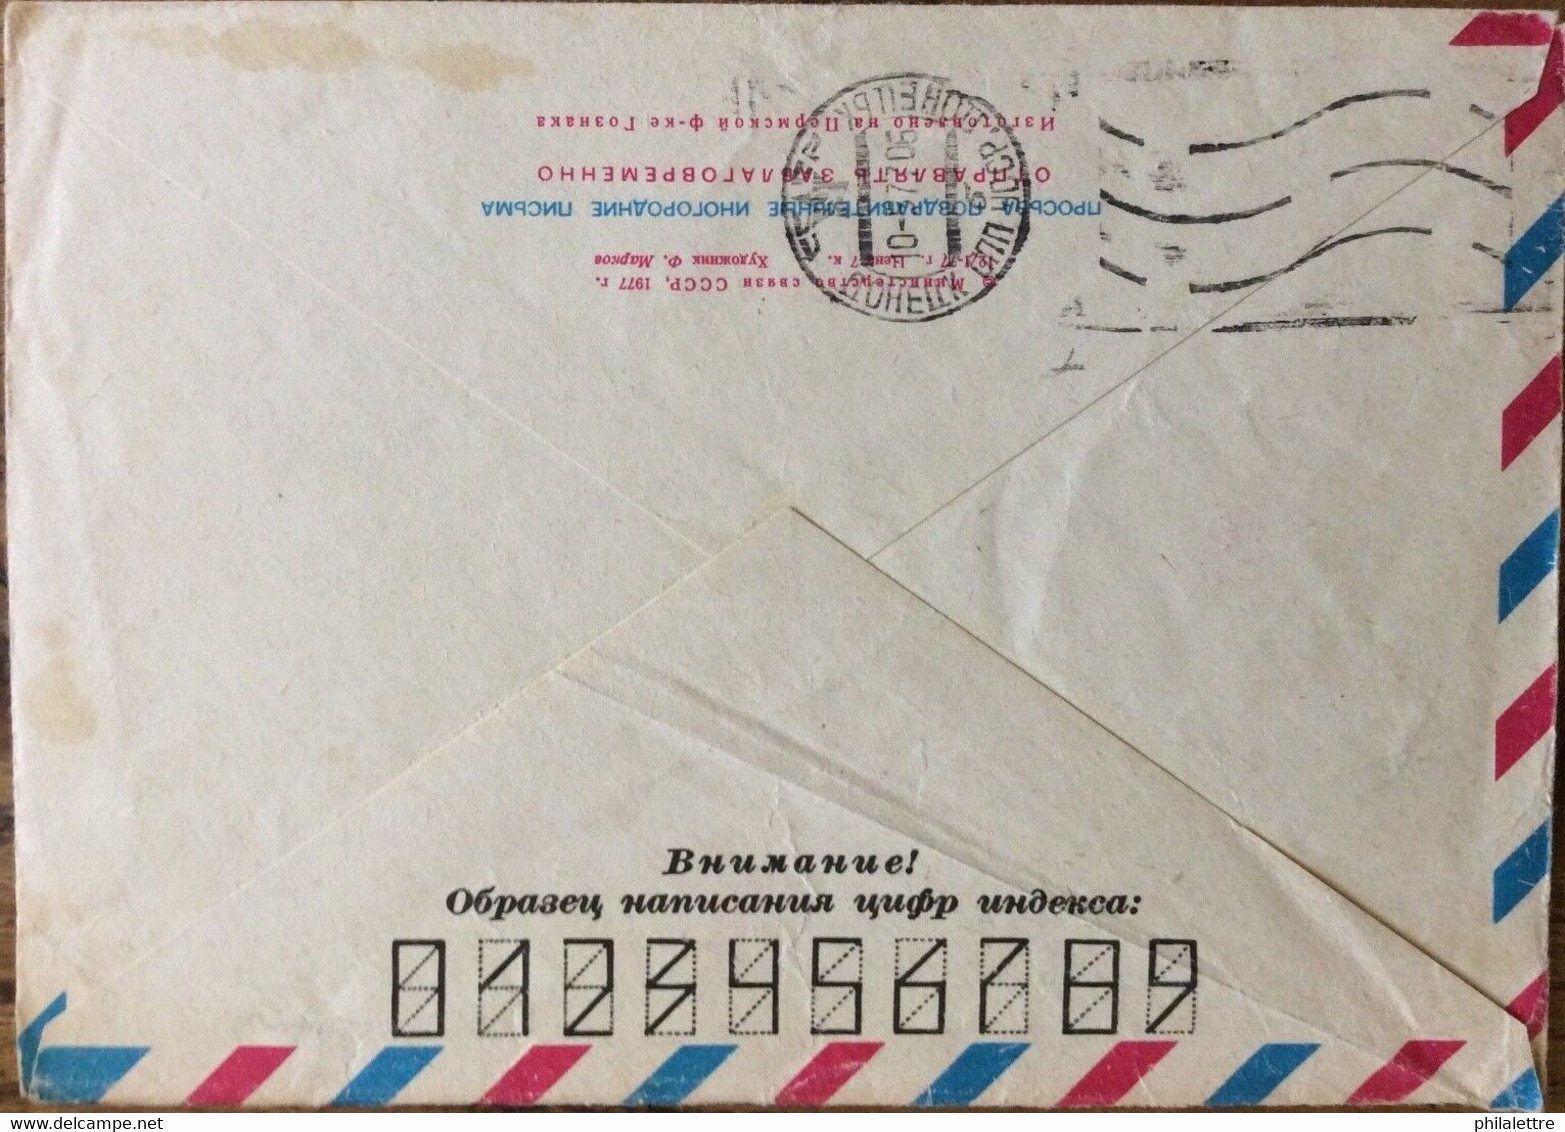 URSS Soviet Union - 1977 - Air Postal Cover TORES (Ukraine) To France - 1960-69